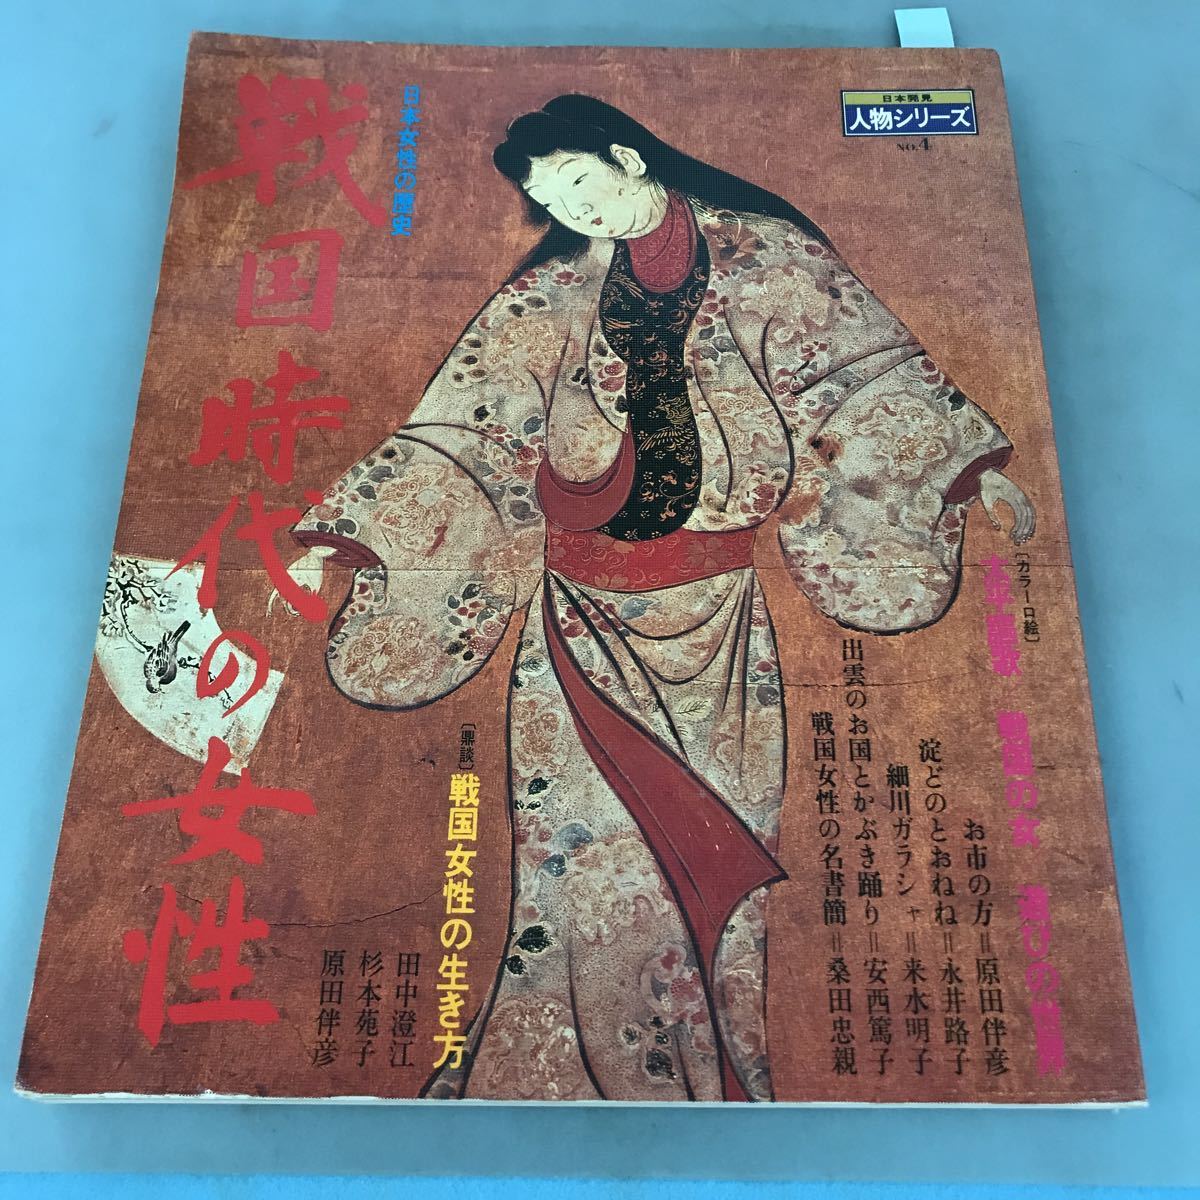 A07-110 日本女性の歴史 戦国時代の女性 日本発見 人物シリーズ 暁教育図書 ページ割れ有り